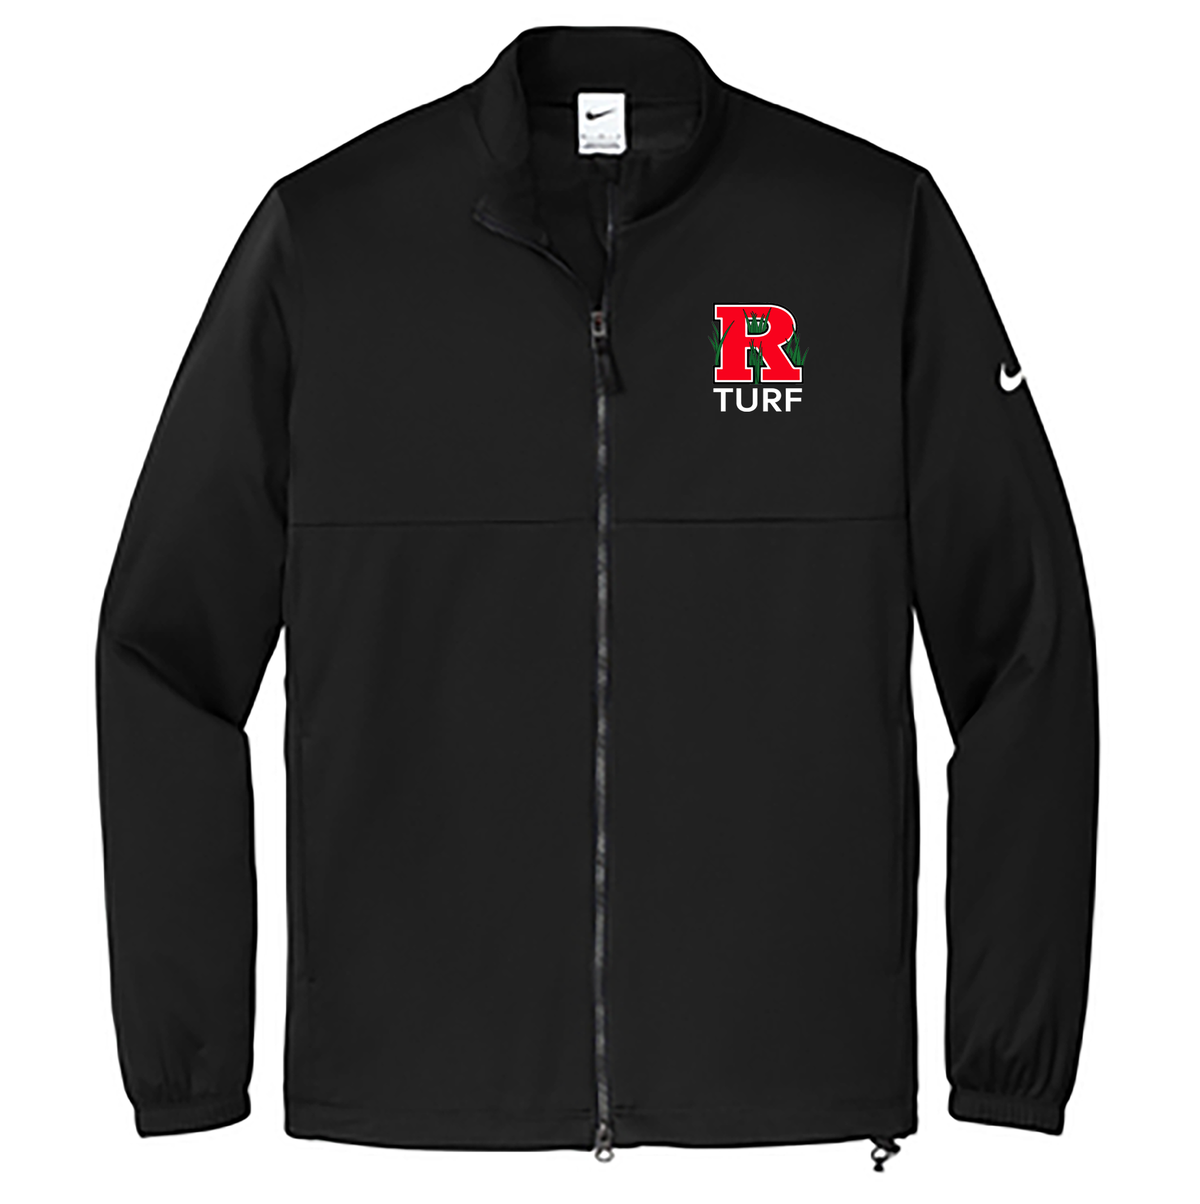 Rutgers Turf Nike Storm-FIT Full-Zip Jacket